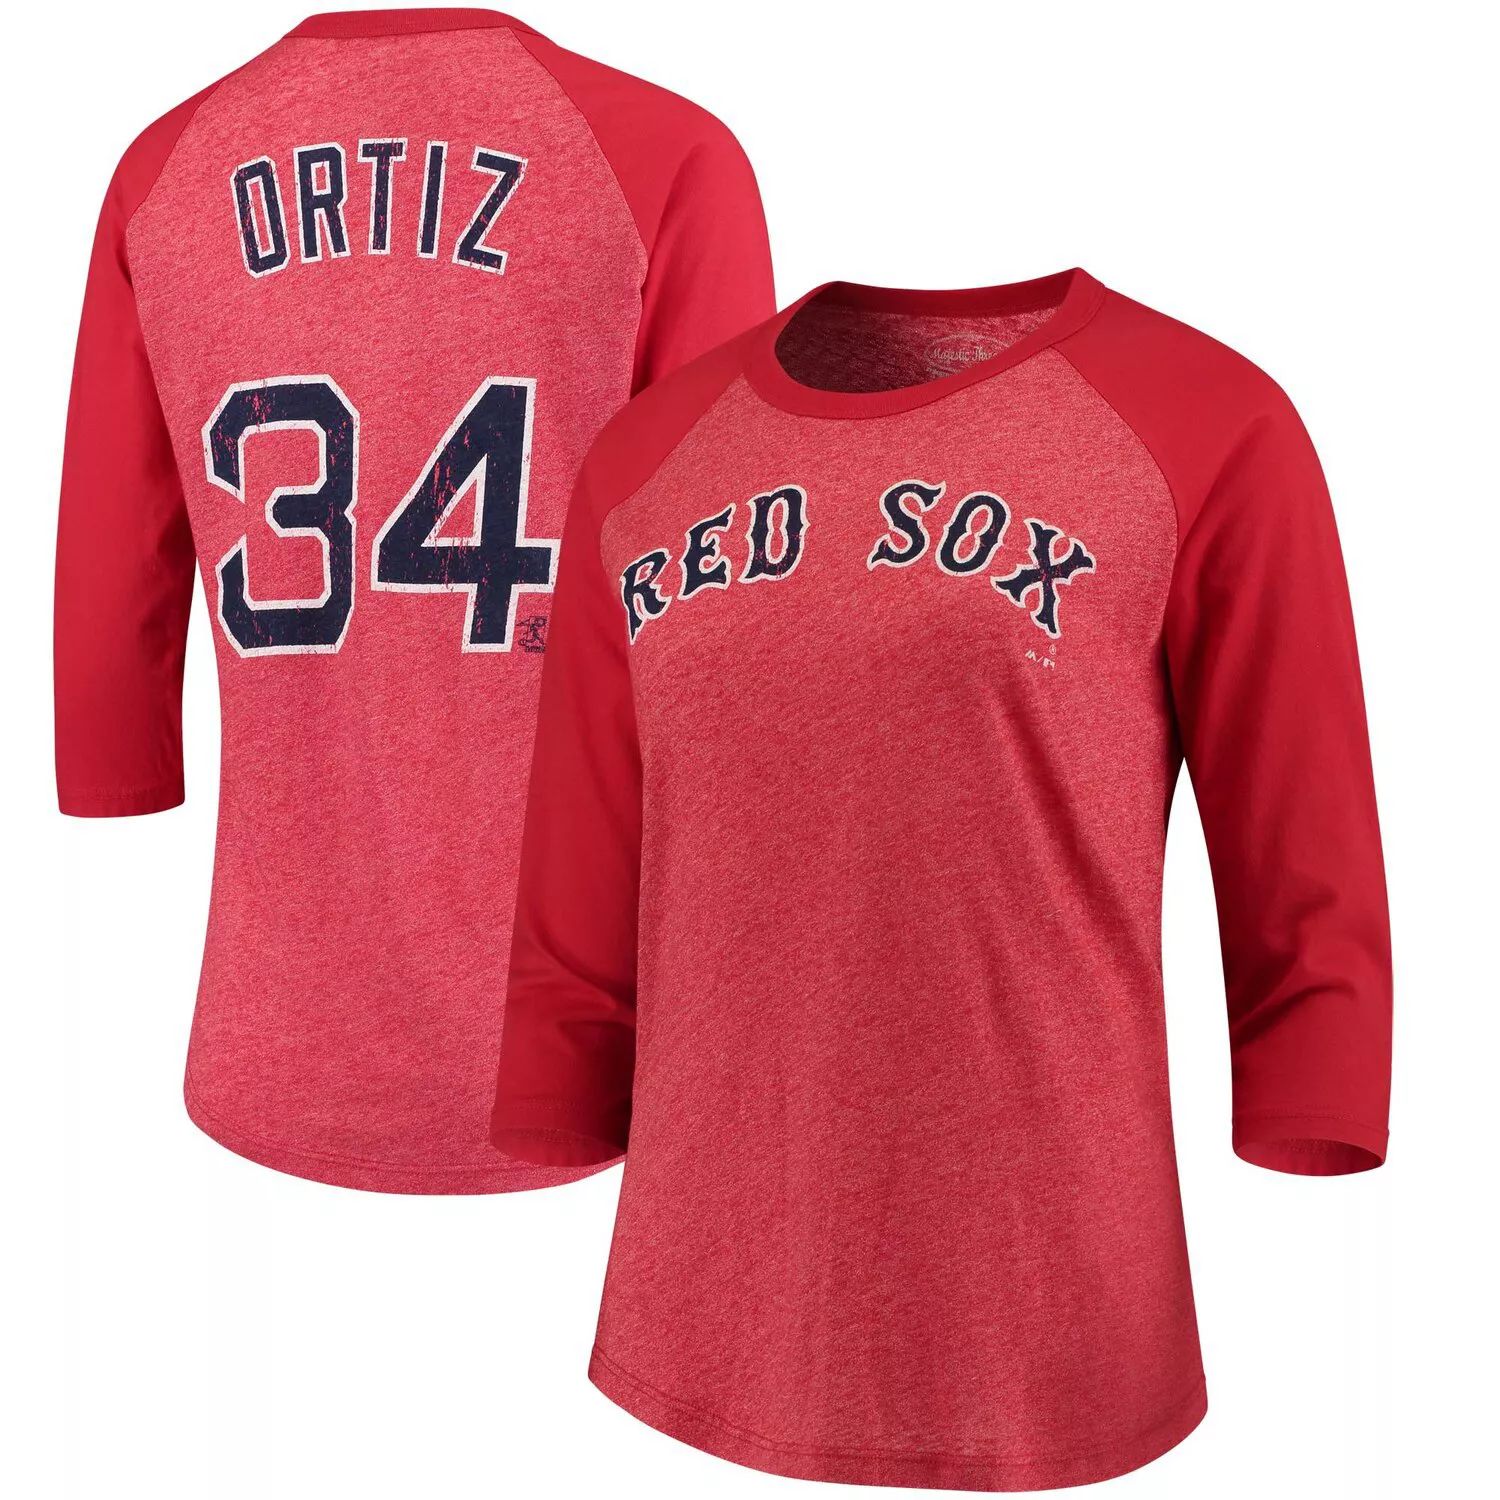 Женская футболка Majestic Threads David Ortiz Red Boston Red Sox, футболка Tri-Blend длиной три четверти с именем и номером реглан Majestic